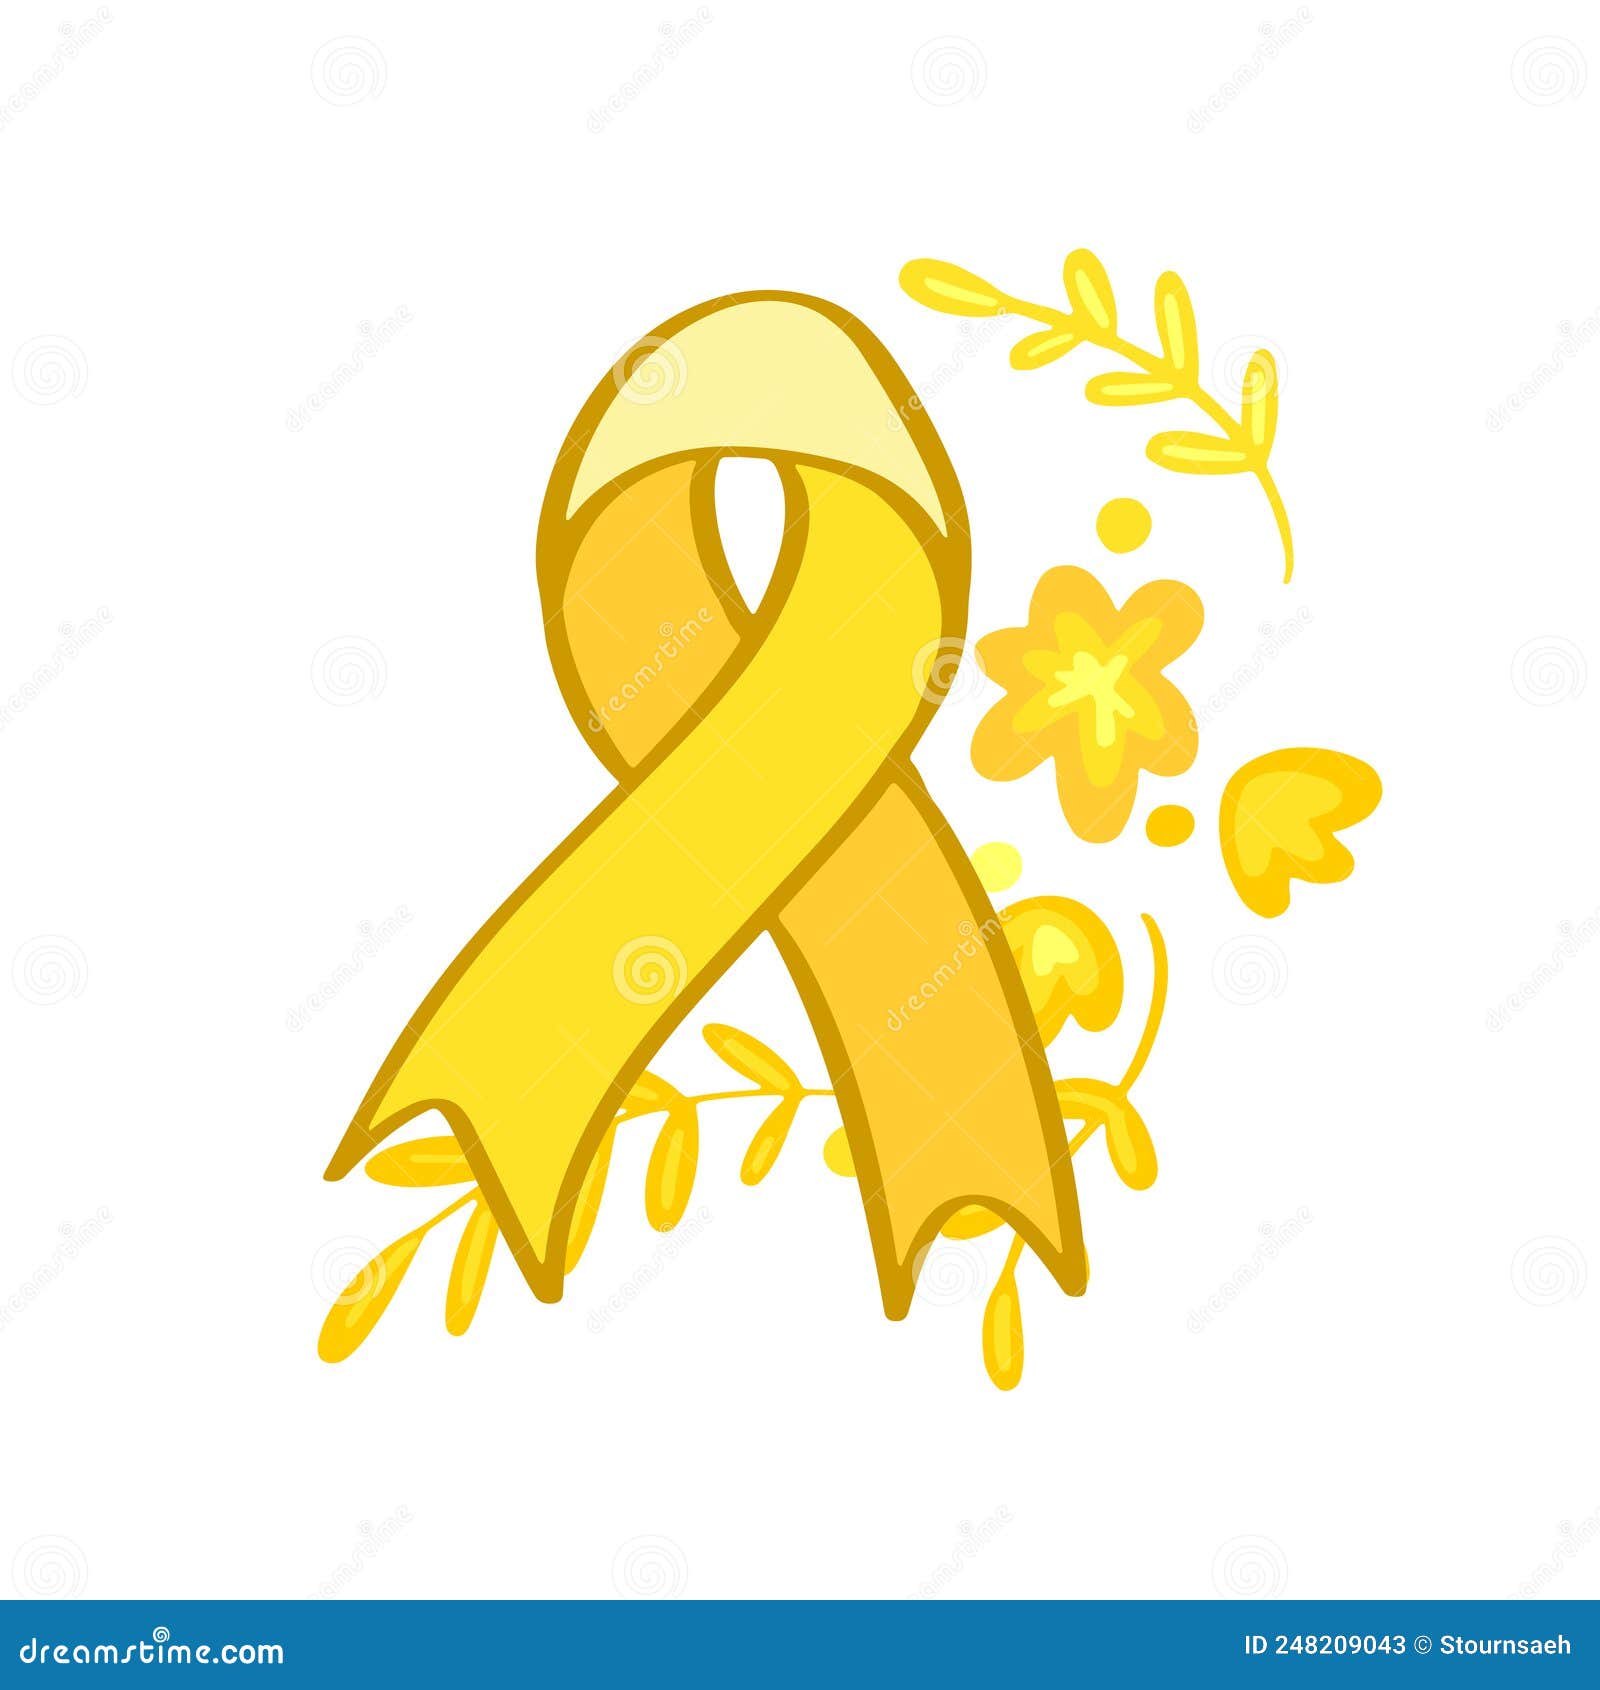 setembro amarelo - yellow sempteber in portuguese, brazillian, suicide prevention month. ribbon support and awareness